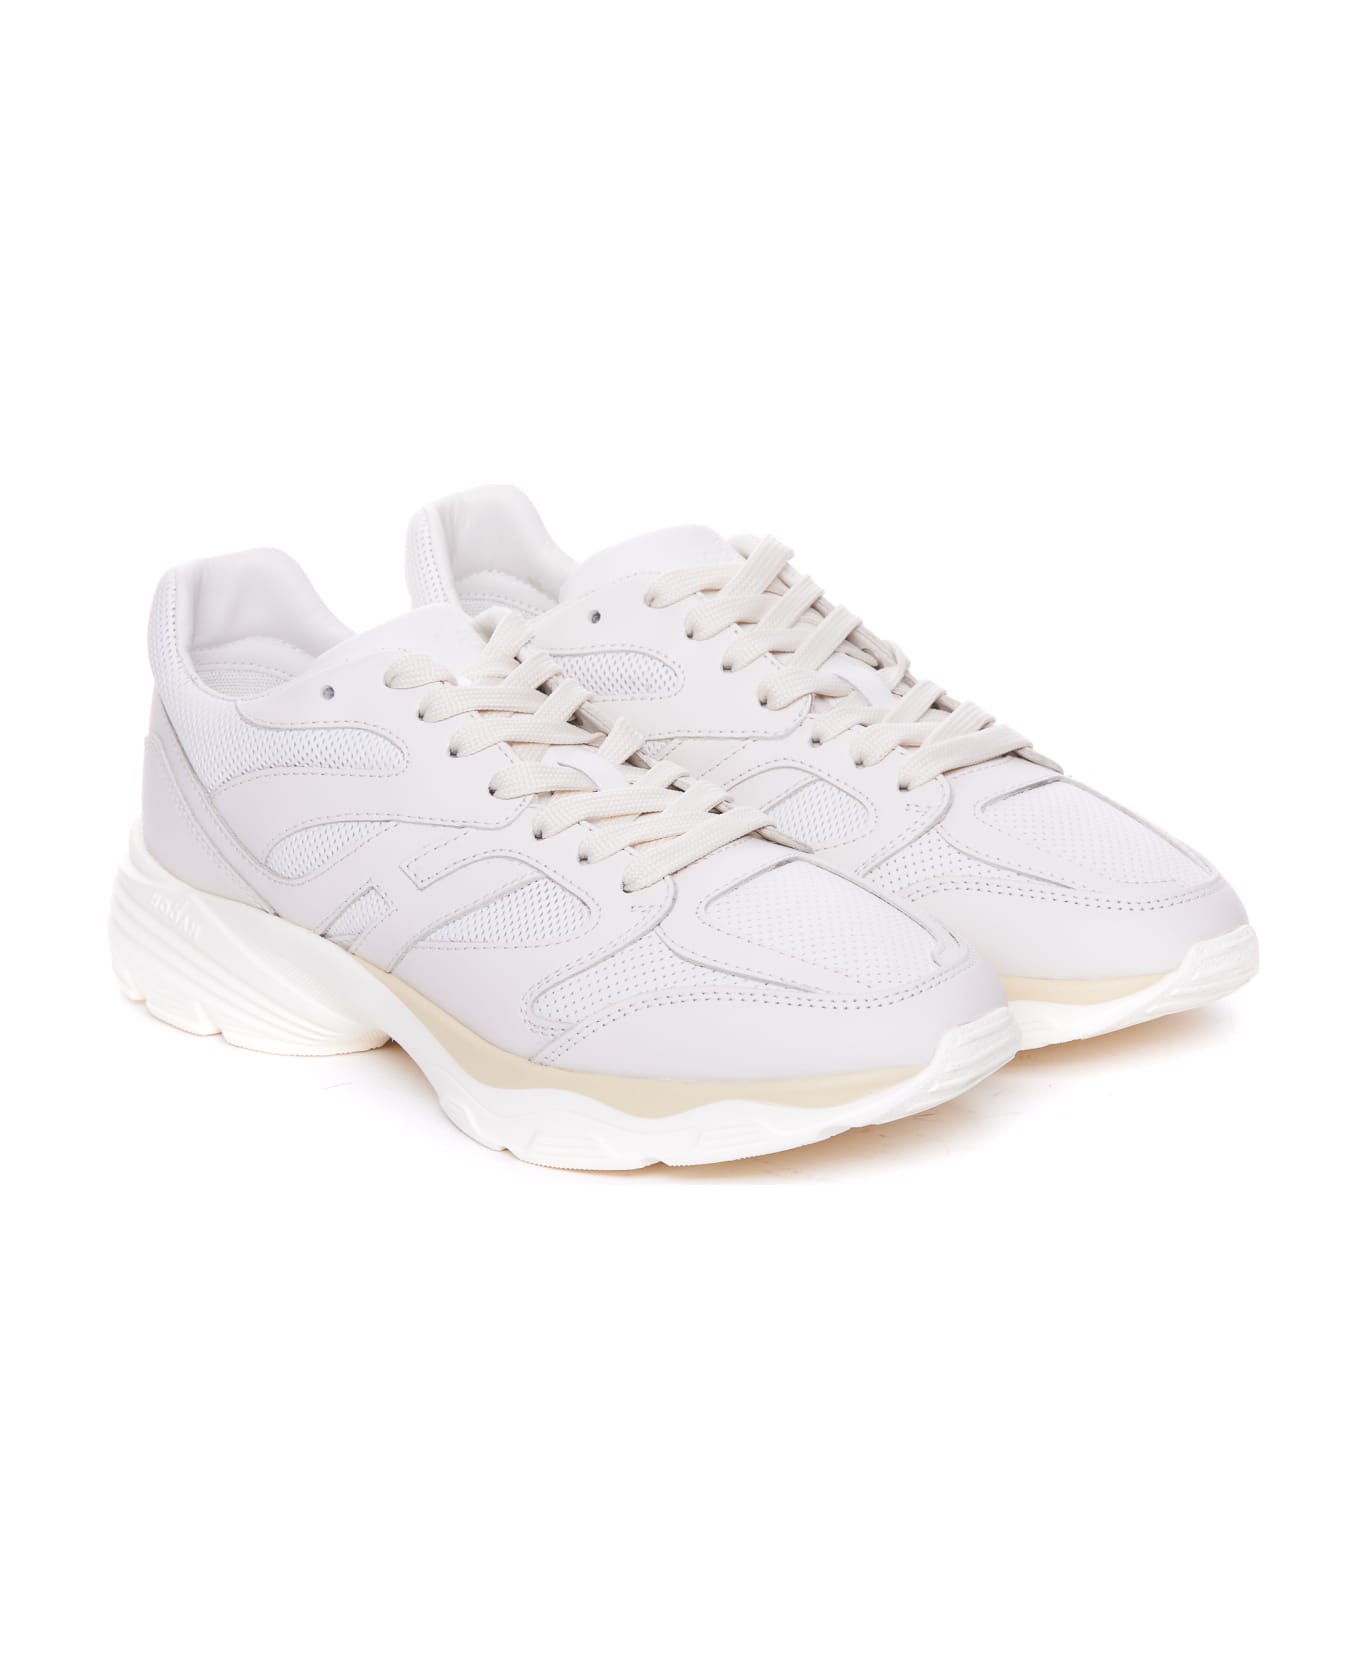 Hogan H665 Sneakers - White